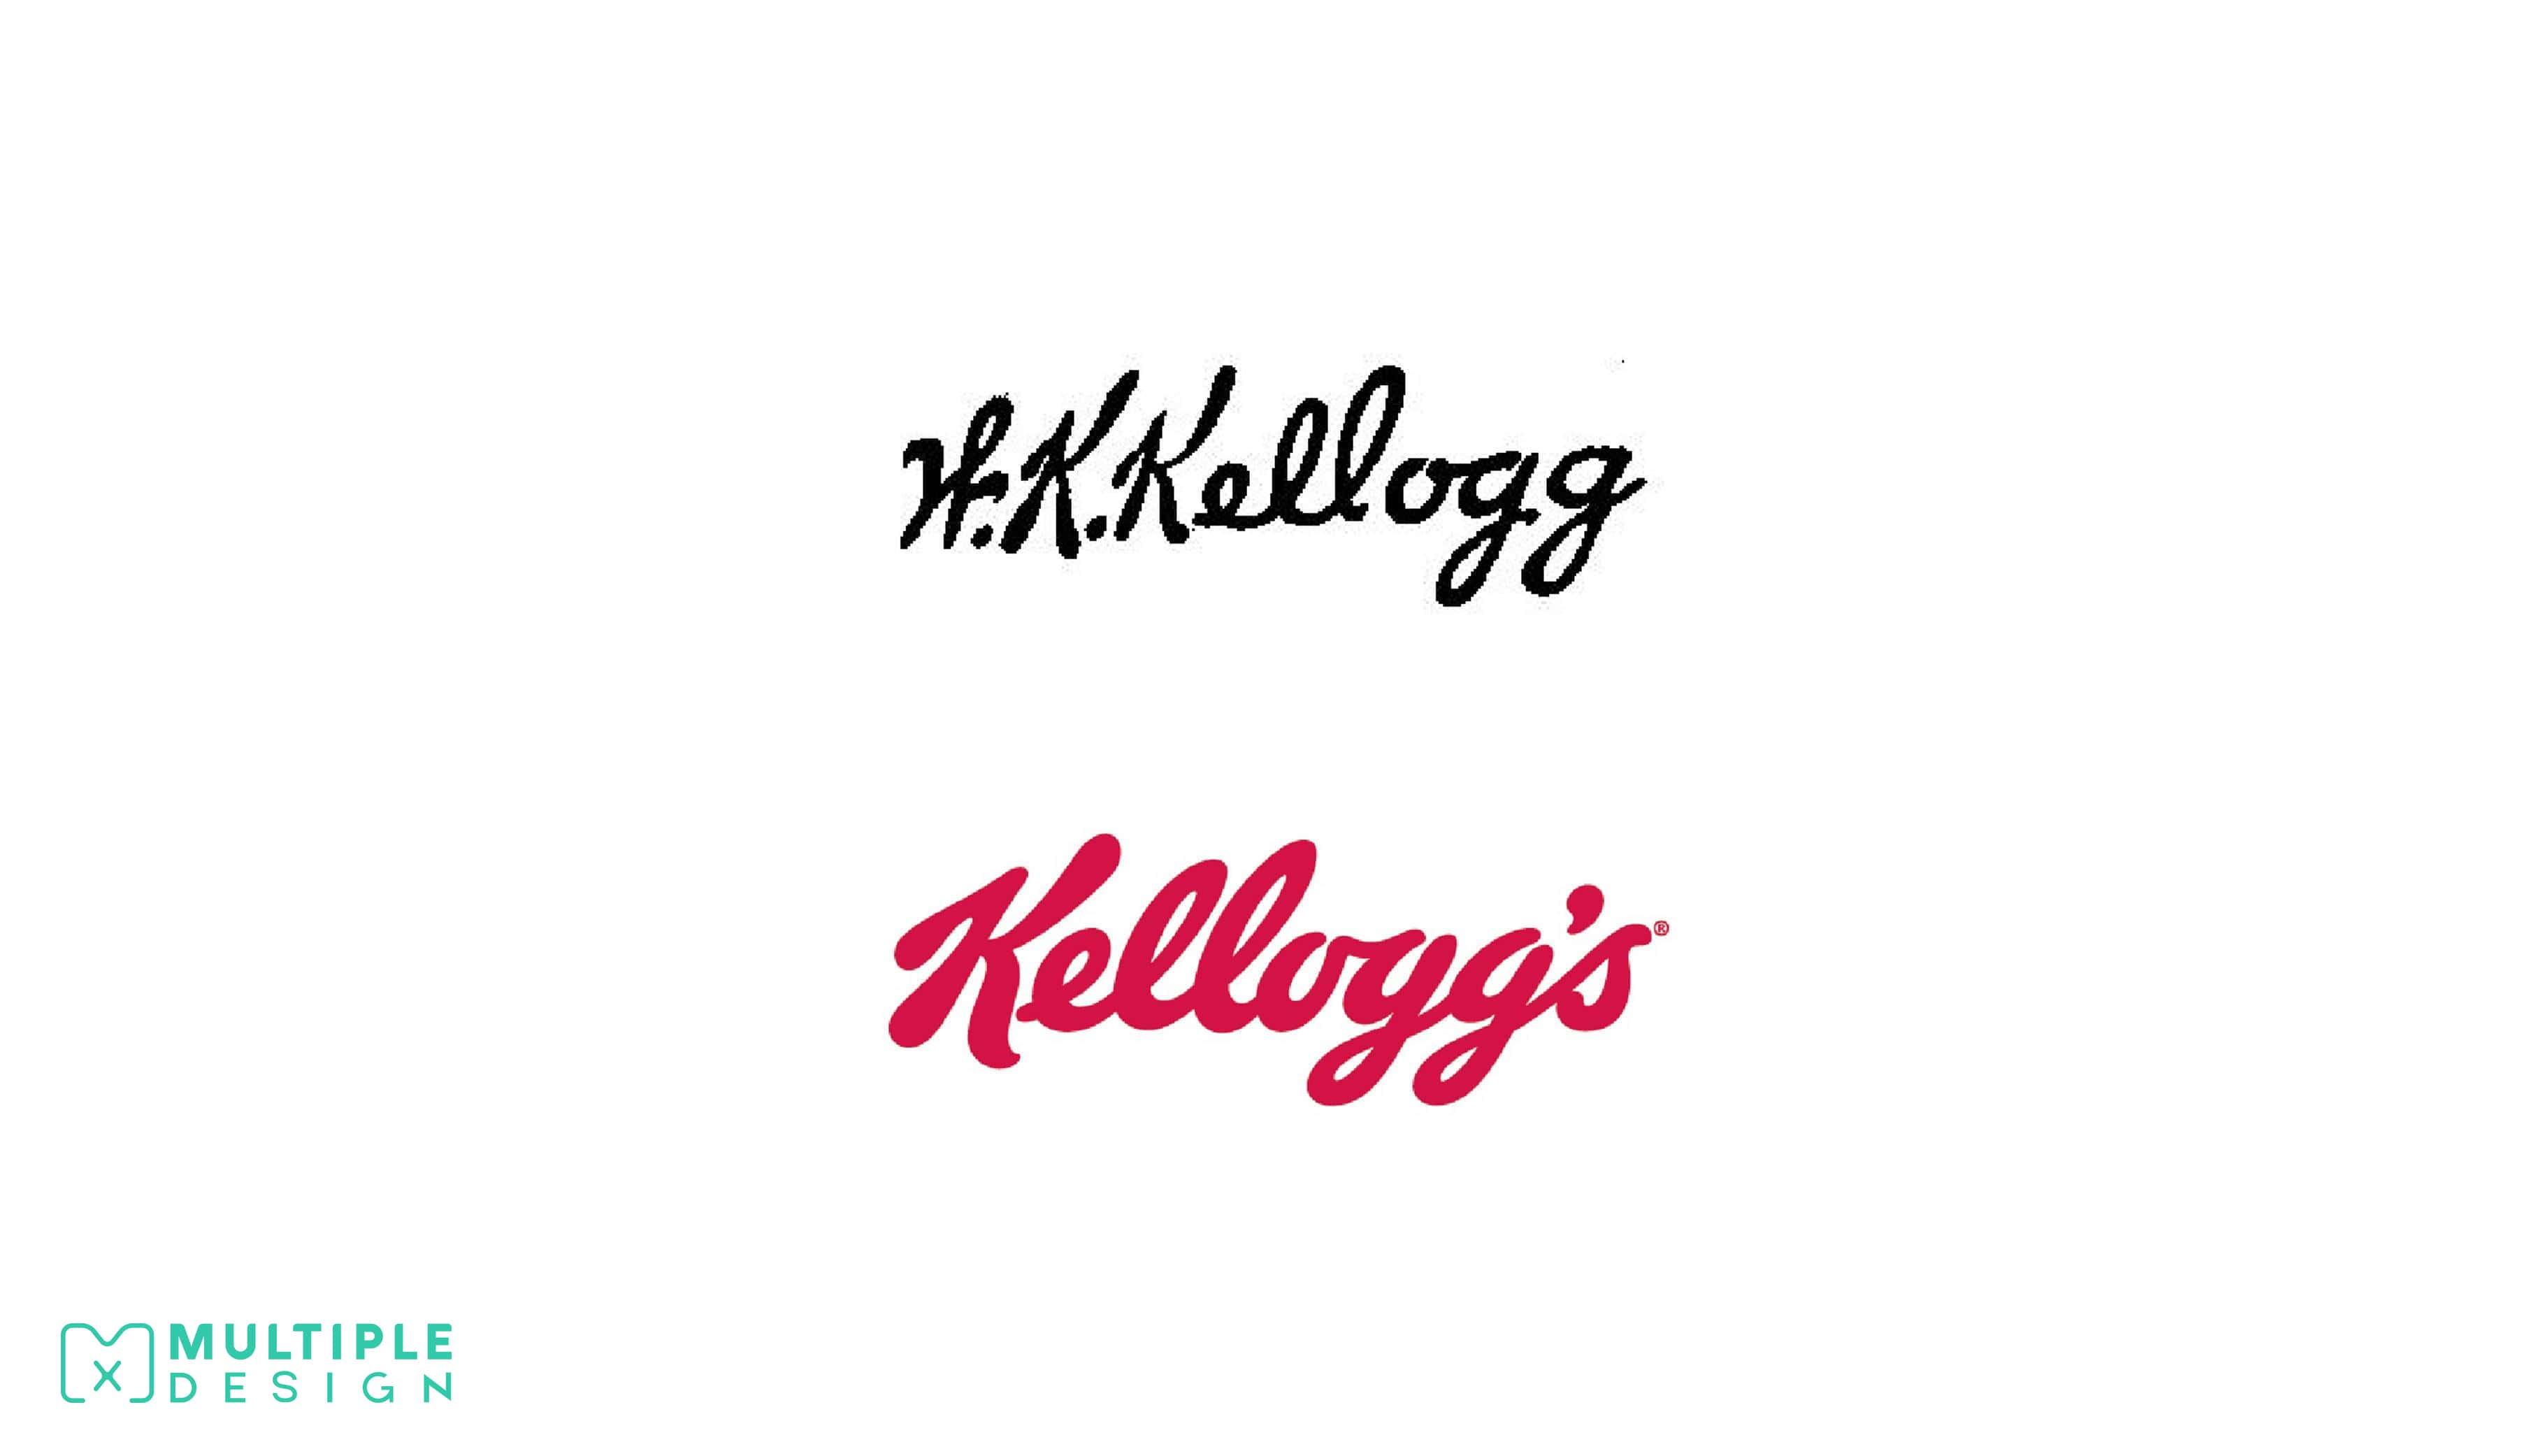 kellog's signature logo